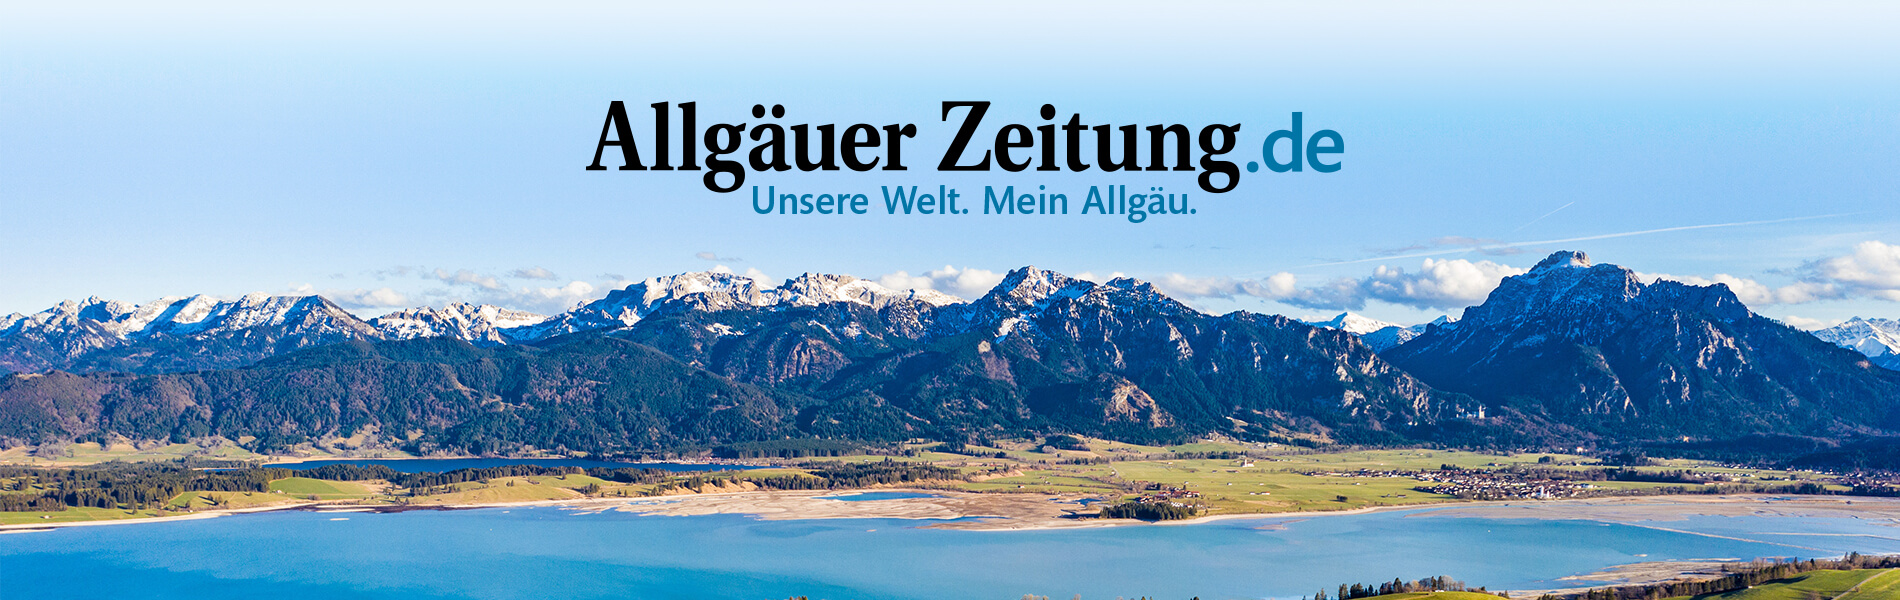 Allgäuer Zeitungsverlag startet Nachrichtenportal allgäuer-zeitung.de